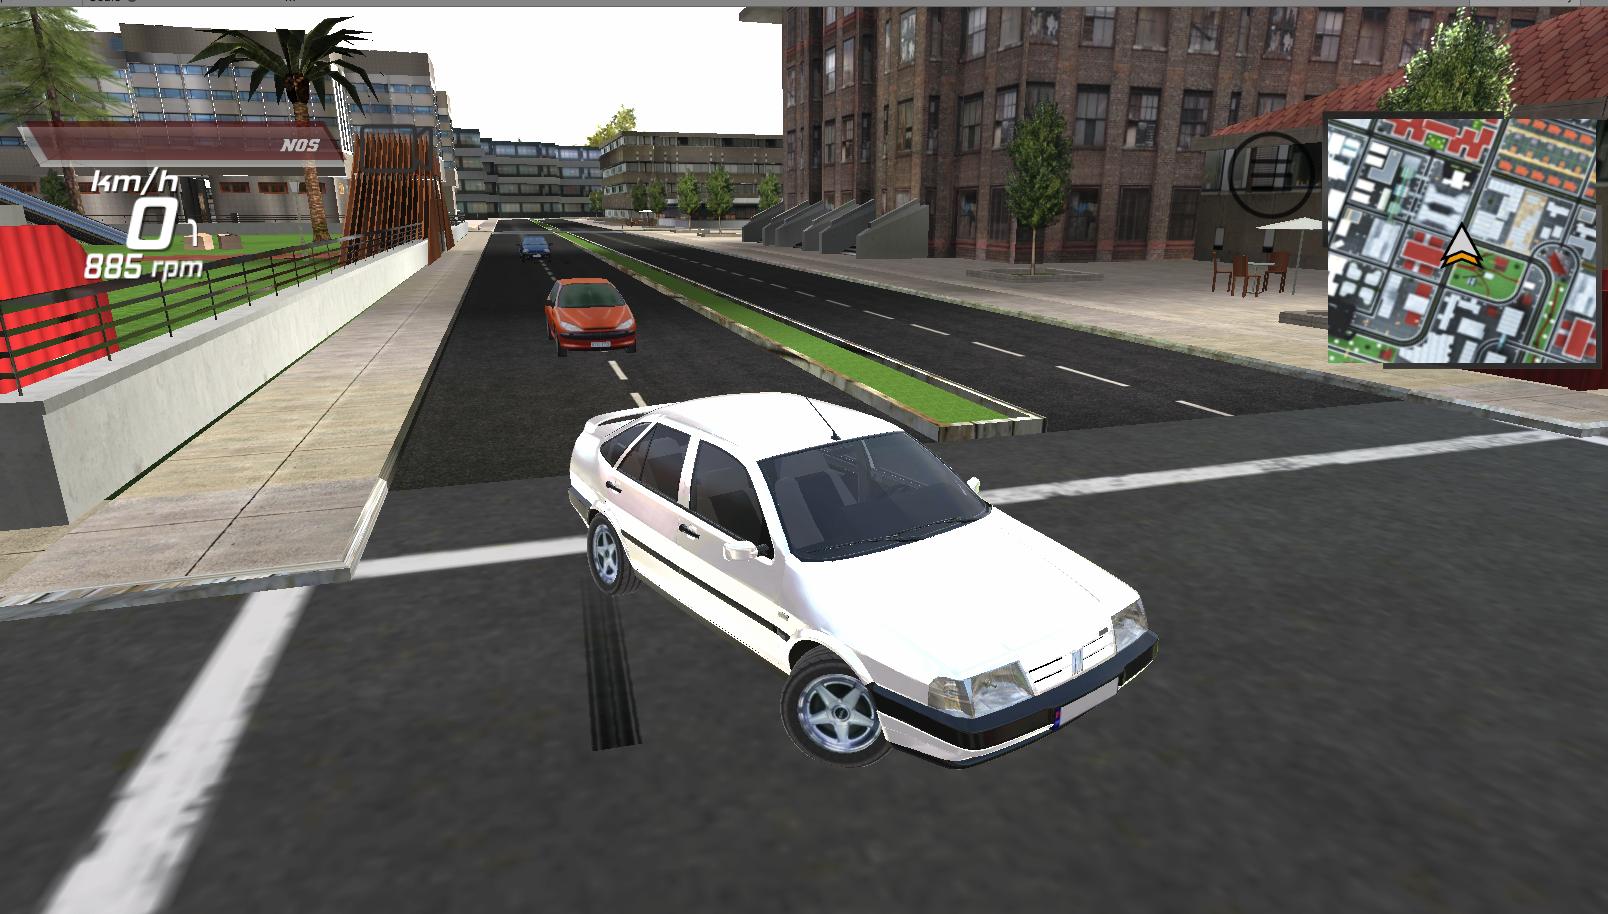 Tempra - City Simulation, Quests and Parking 1.7 Screenshot 19